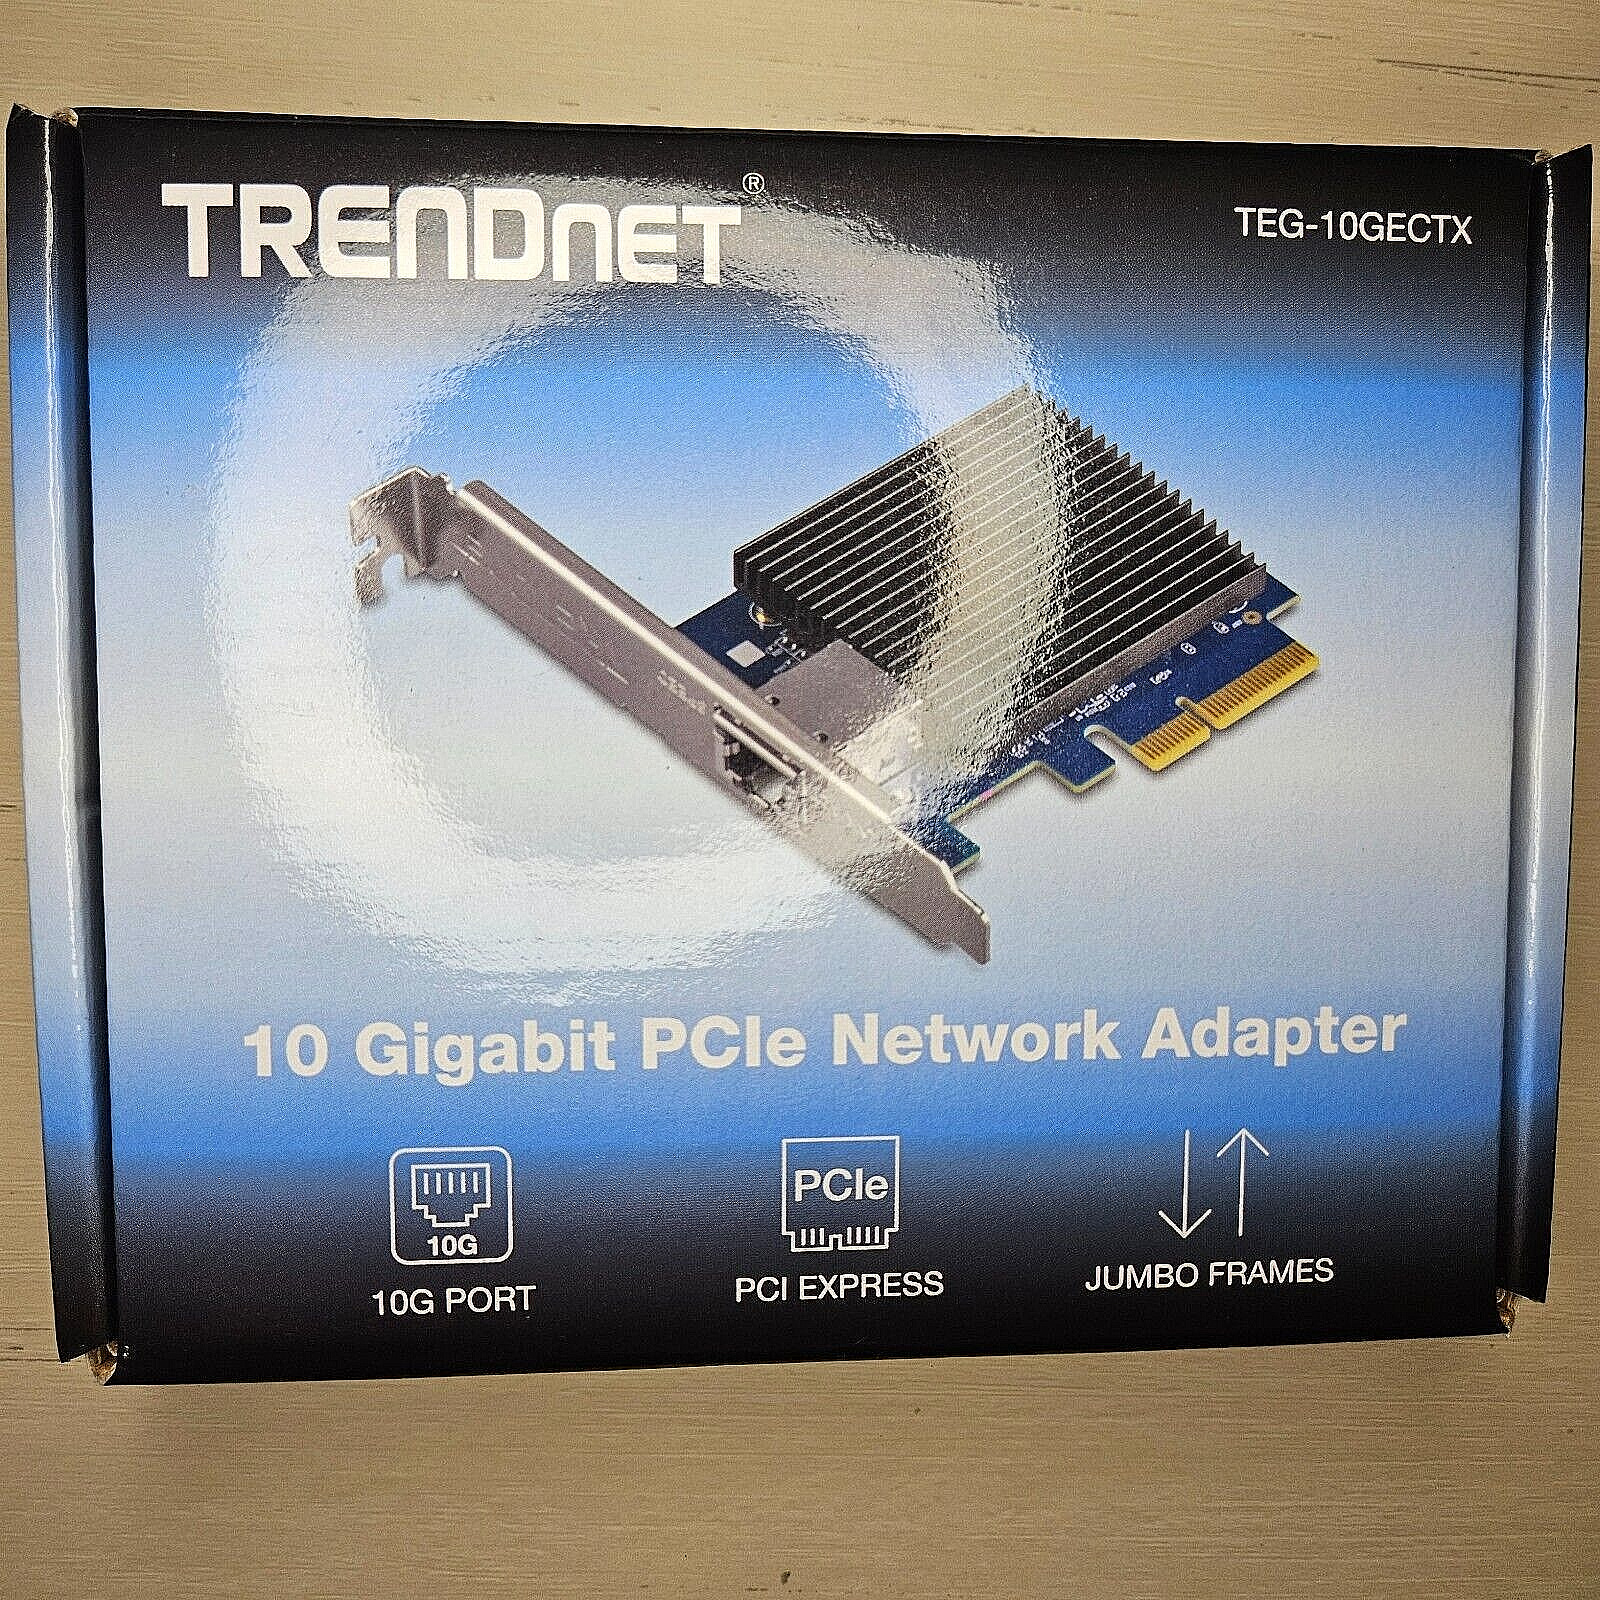 TRENDnet 10 Gigabit PCIe Network Adapter; Complete with OG packaging; 